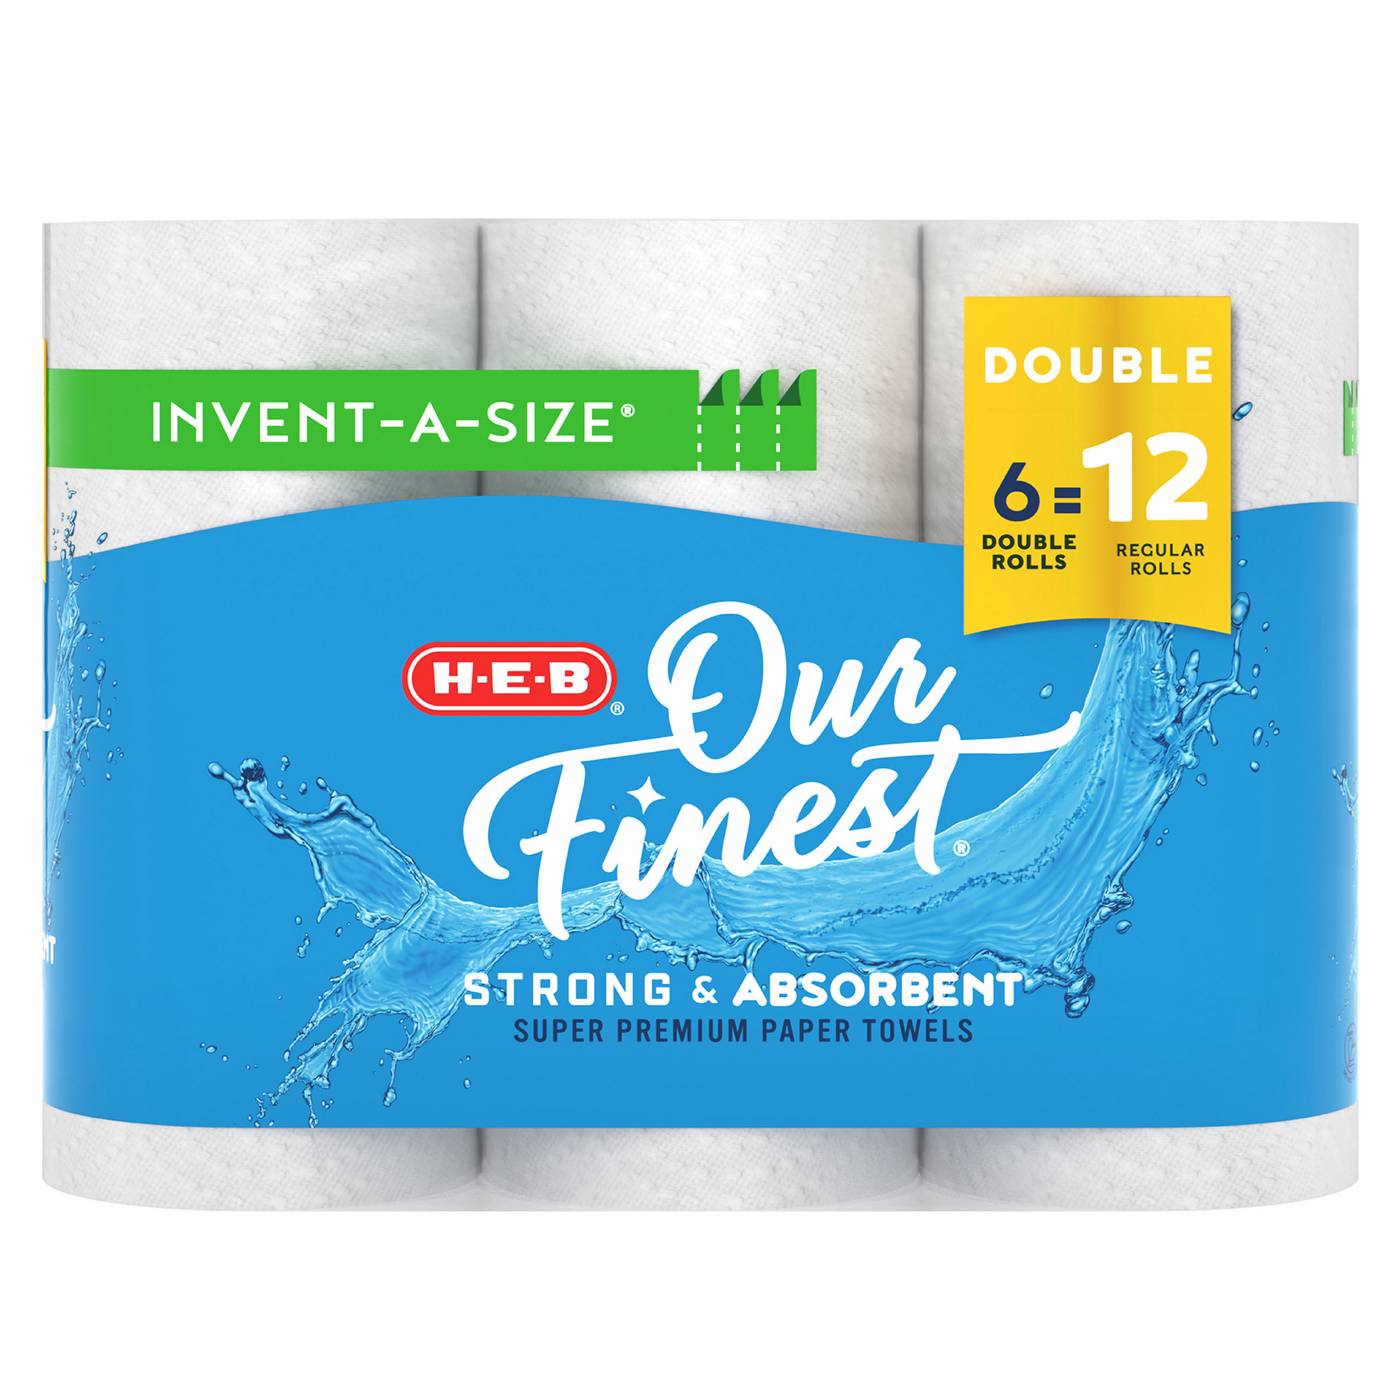 H-E-B Our Finest Invent-A-Size Paper Towels - Shop Paper Towels at